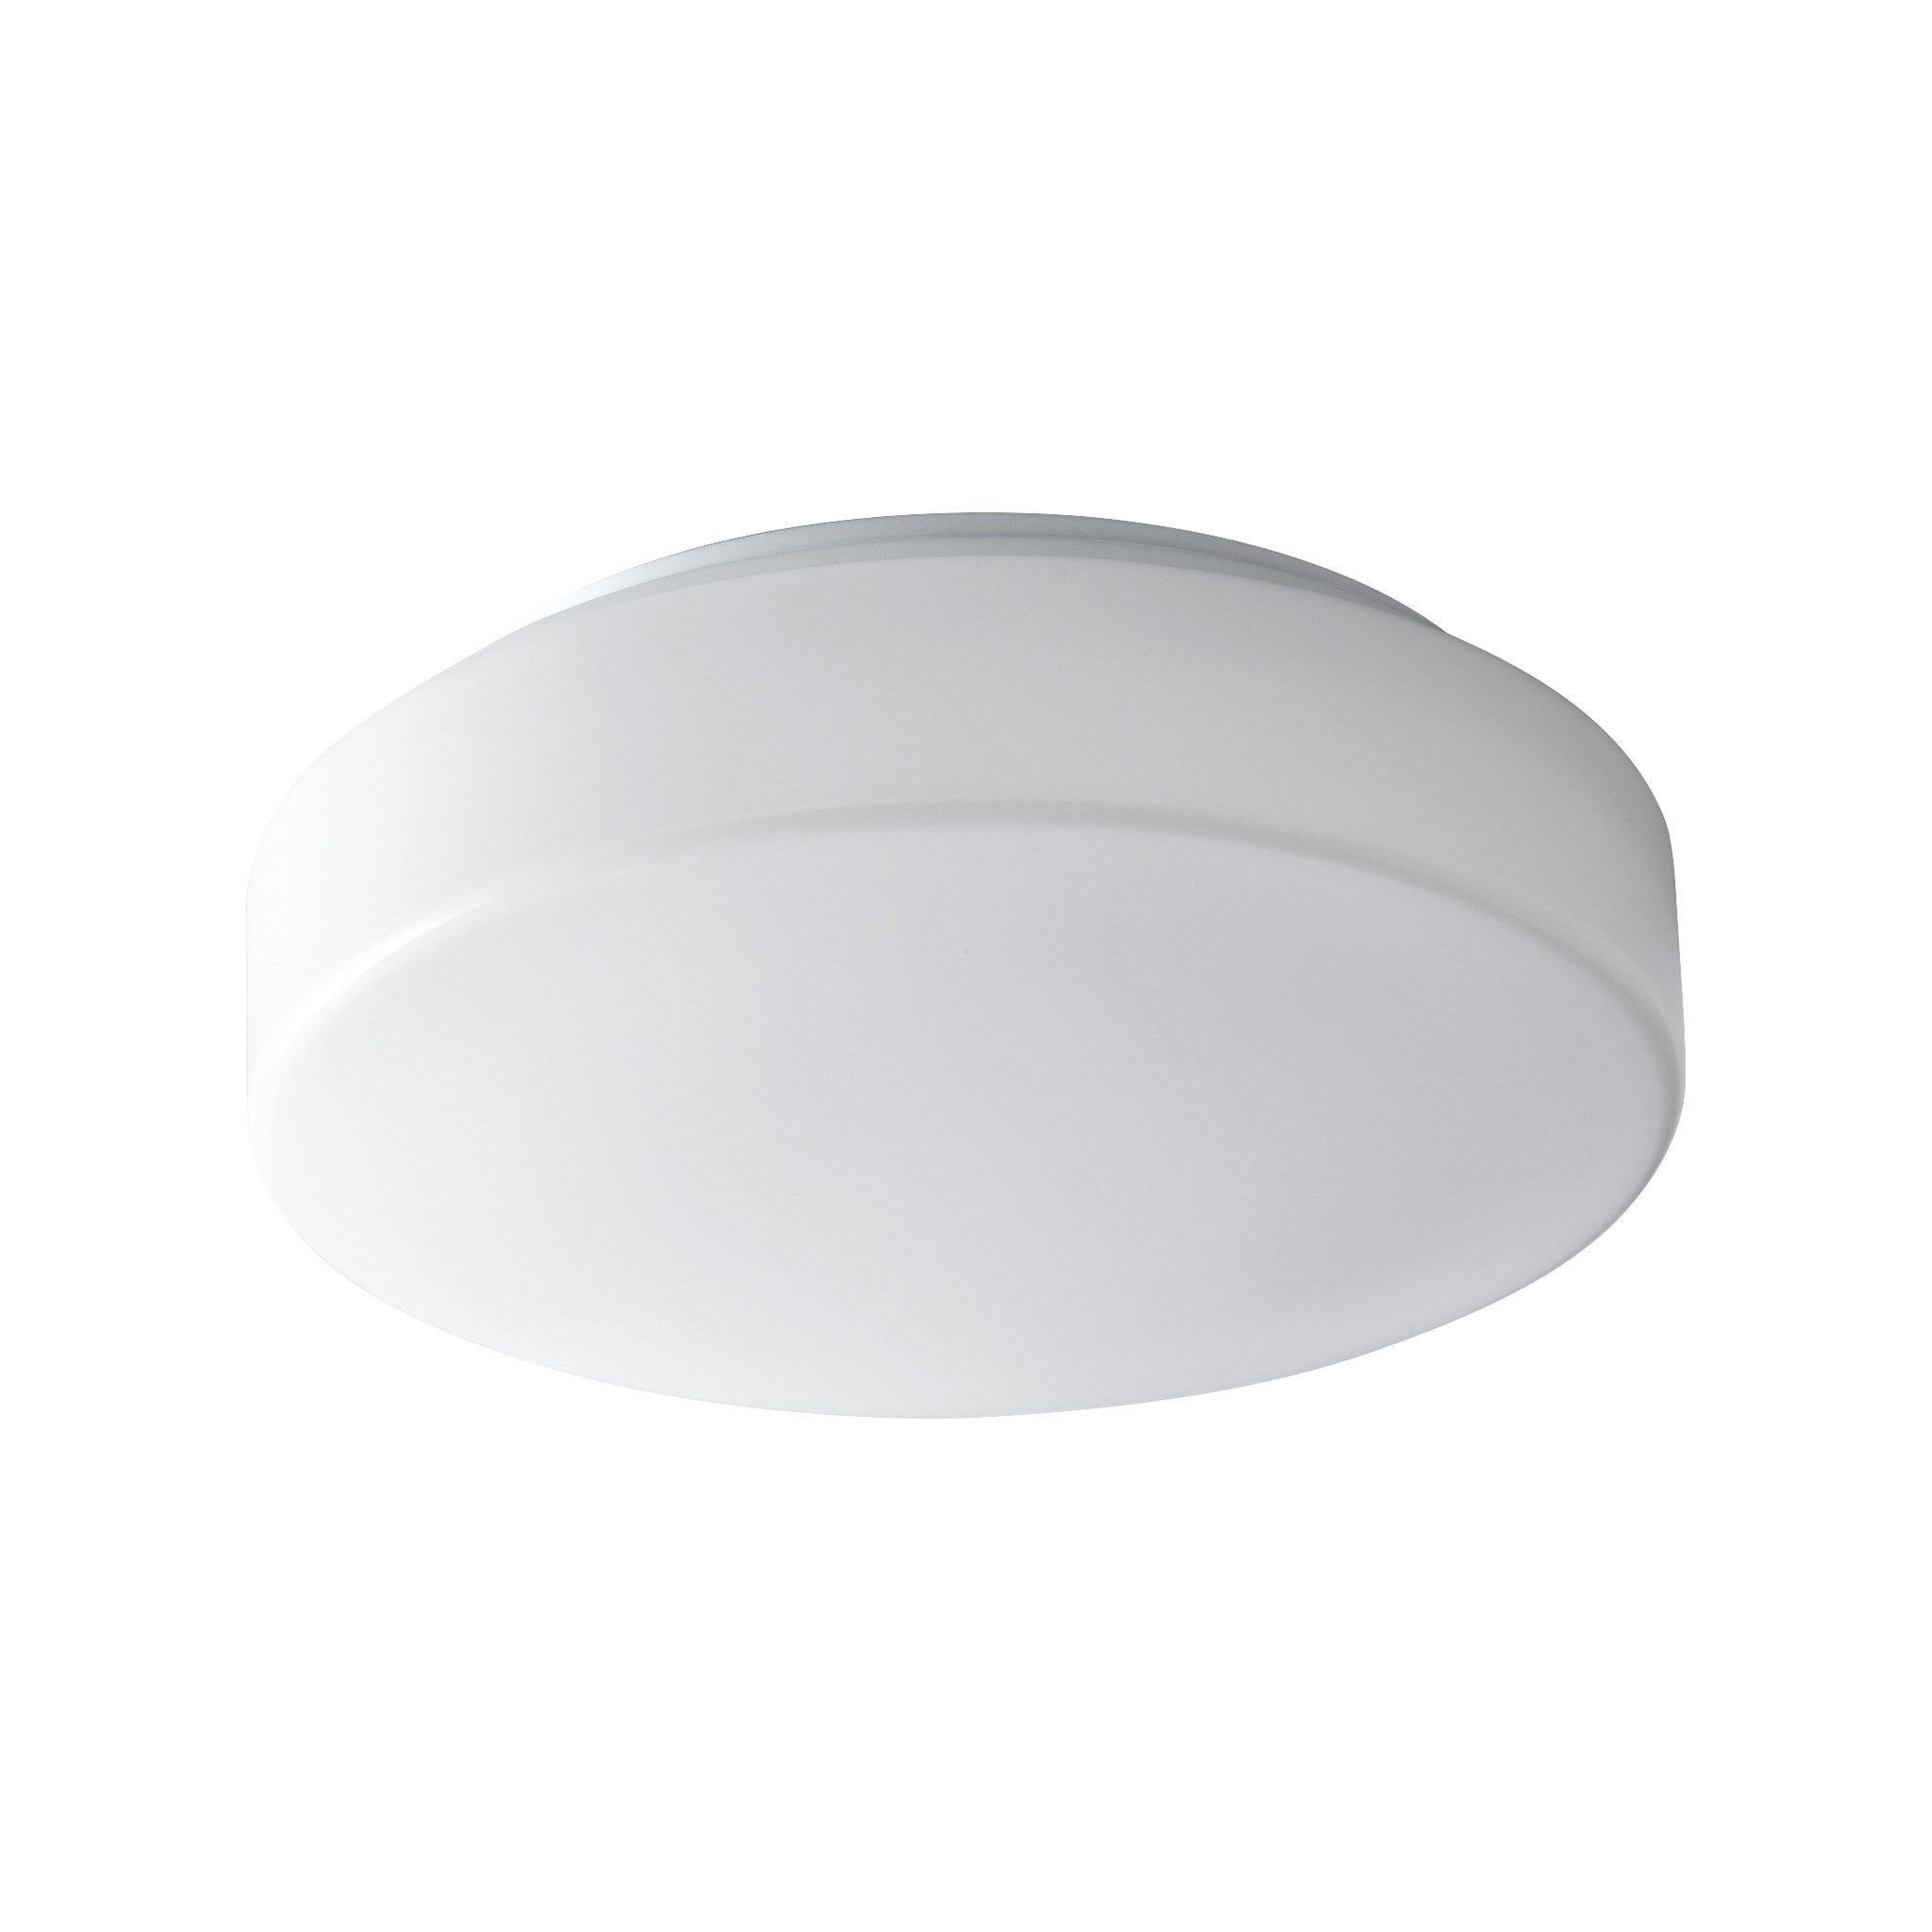 Oxygen Lighting 2-6138-6 Rhythm 10 Inch 22W Ceiling Mount Lighting Fixture - White